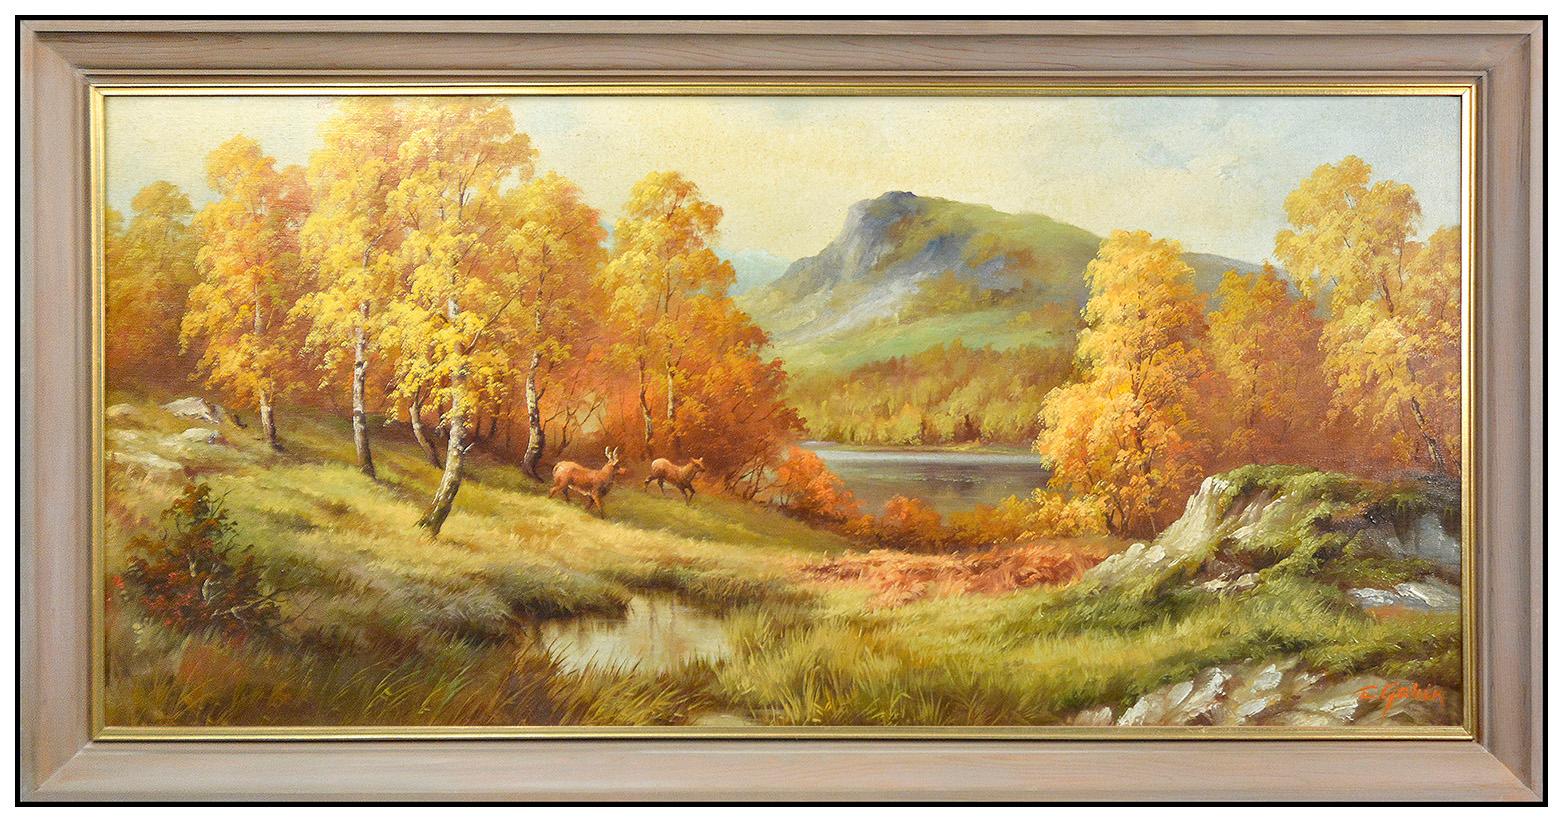 eugene garin Landscape Painting - Eugene Garin Oil On Canvas Painting Signed Western Mountain Landscape Large Art